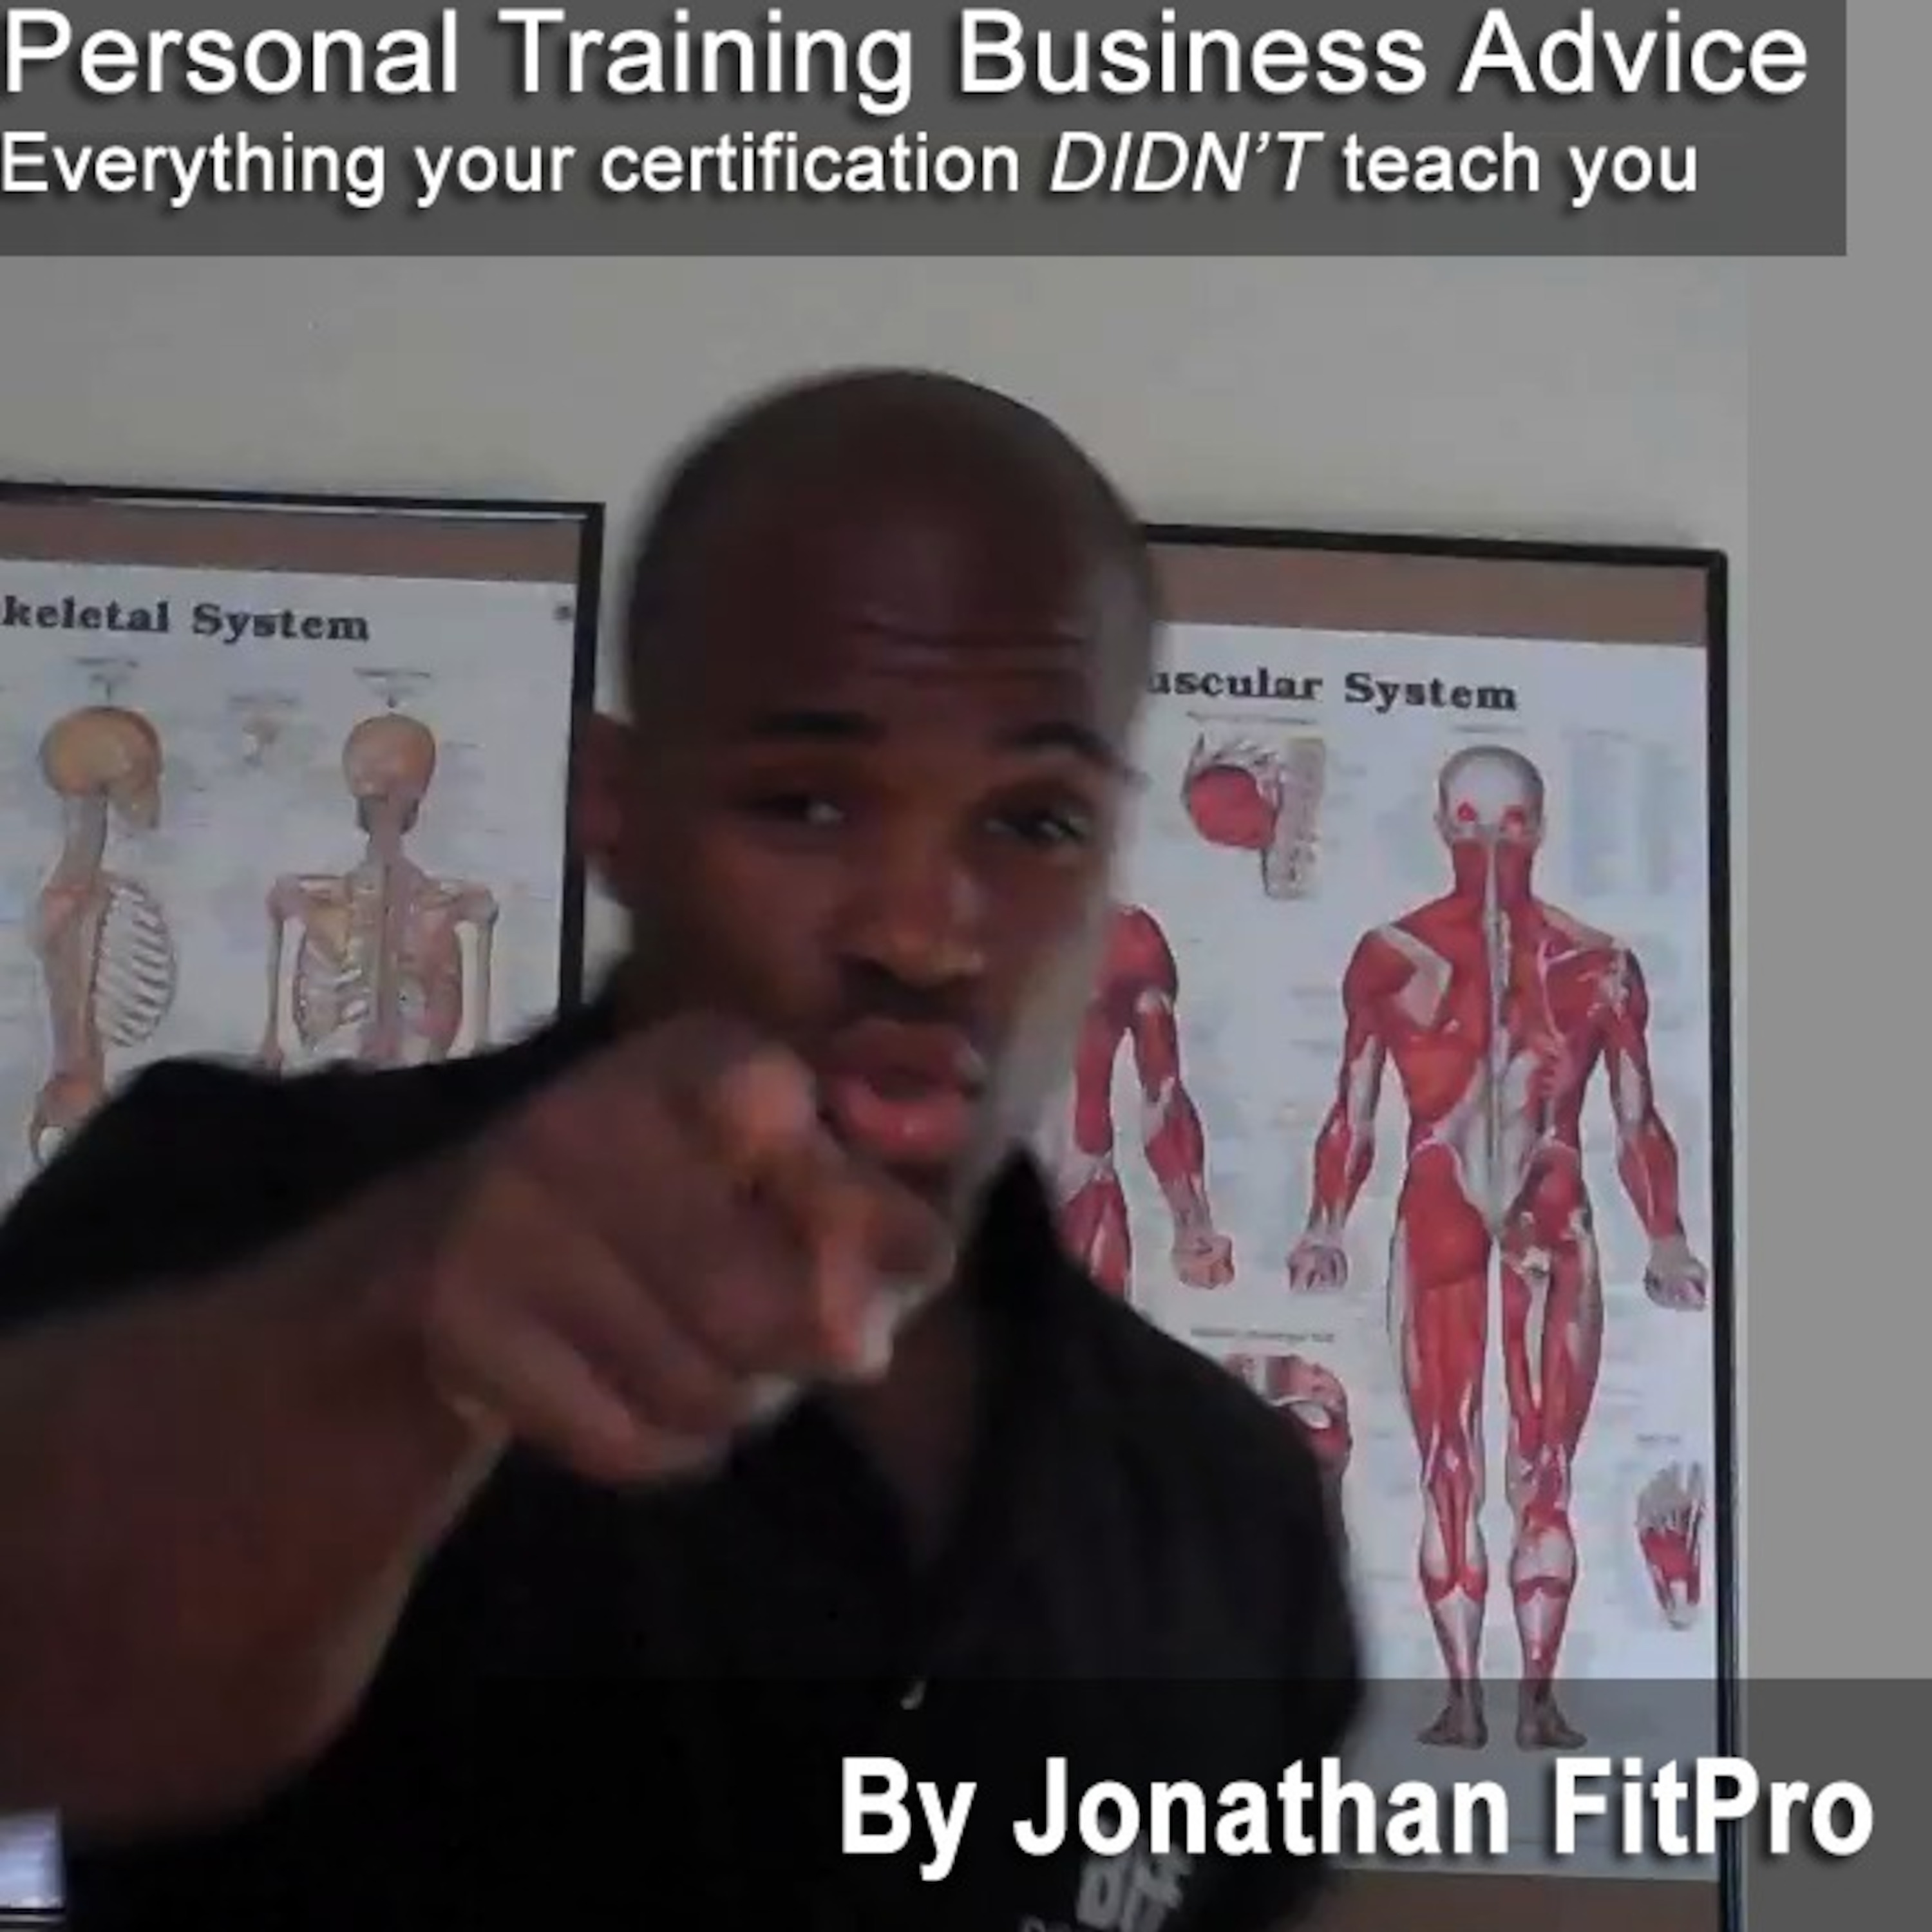 JohnnyFitPro's Personal Trainer Advice